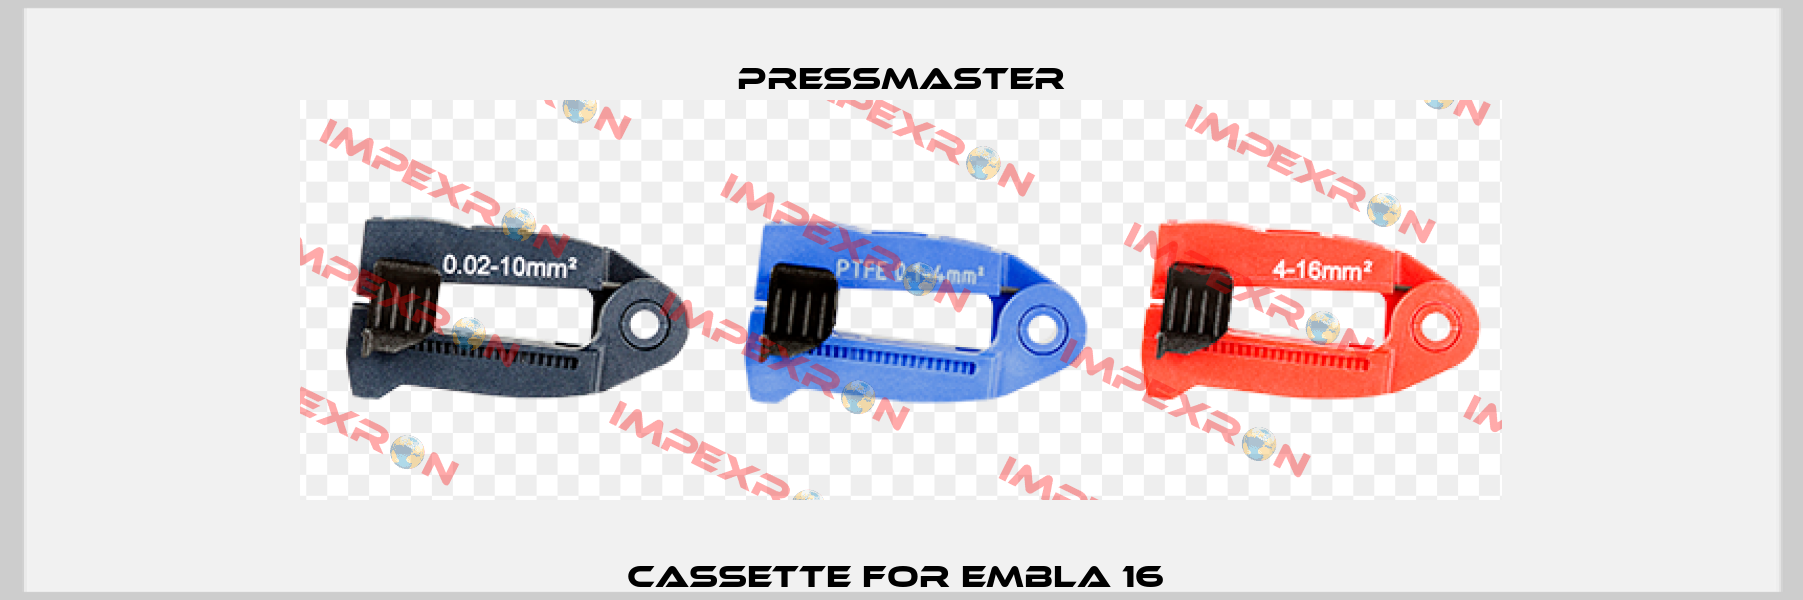 cassette for EMBLA 16  Pressmaster